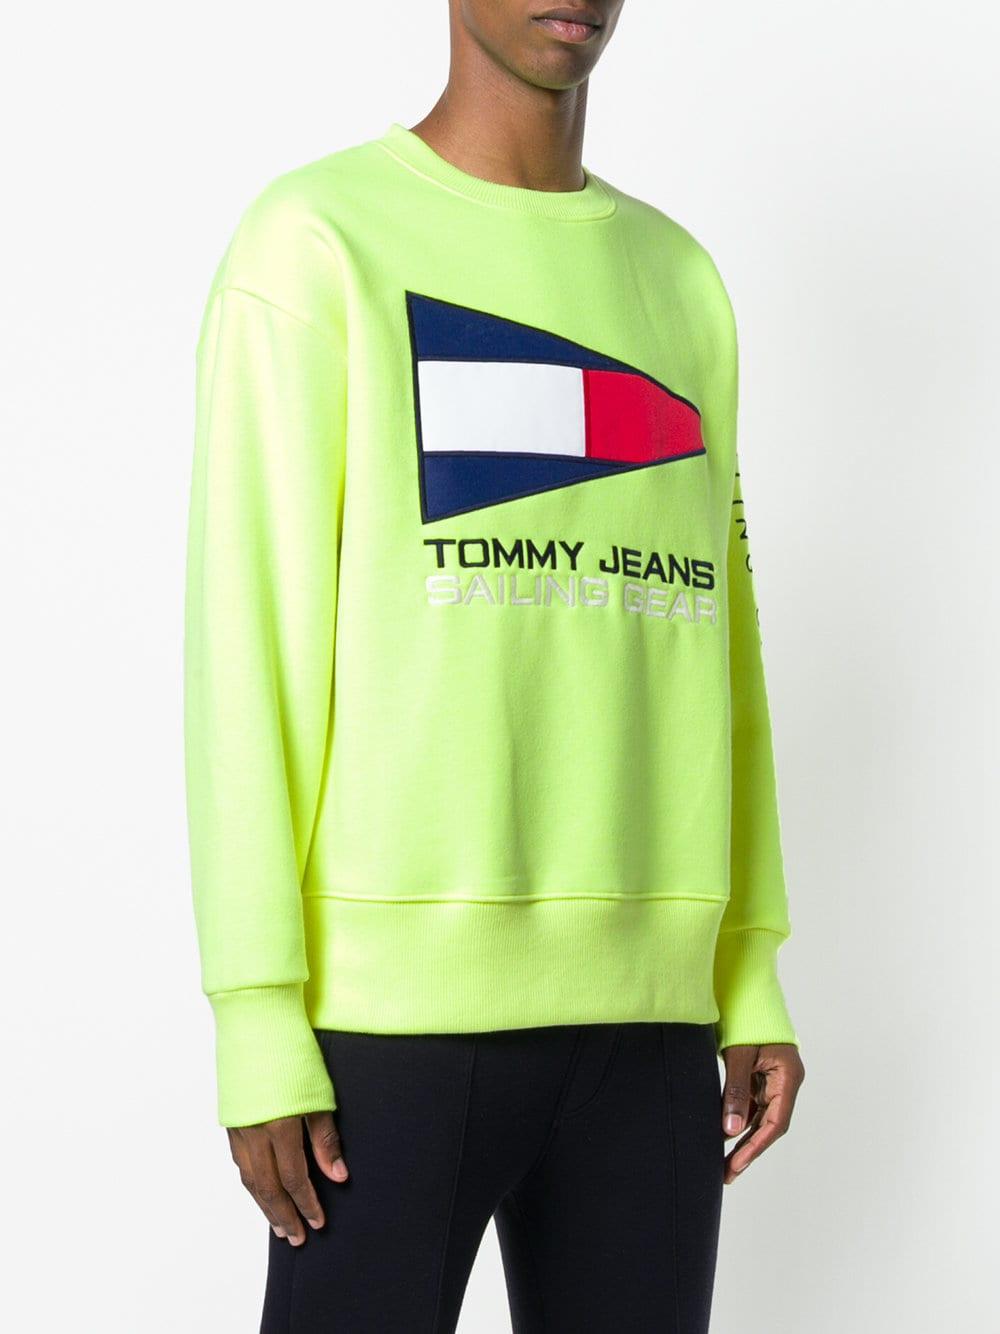 Lime Green Tommy Hilfiger Shirt Flash Sales, SAVE 53%.